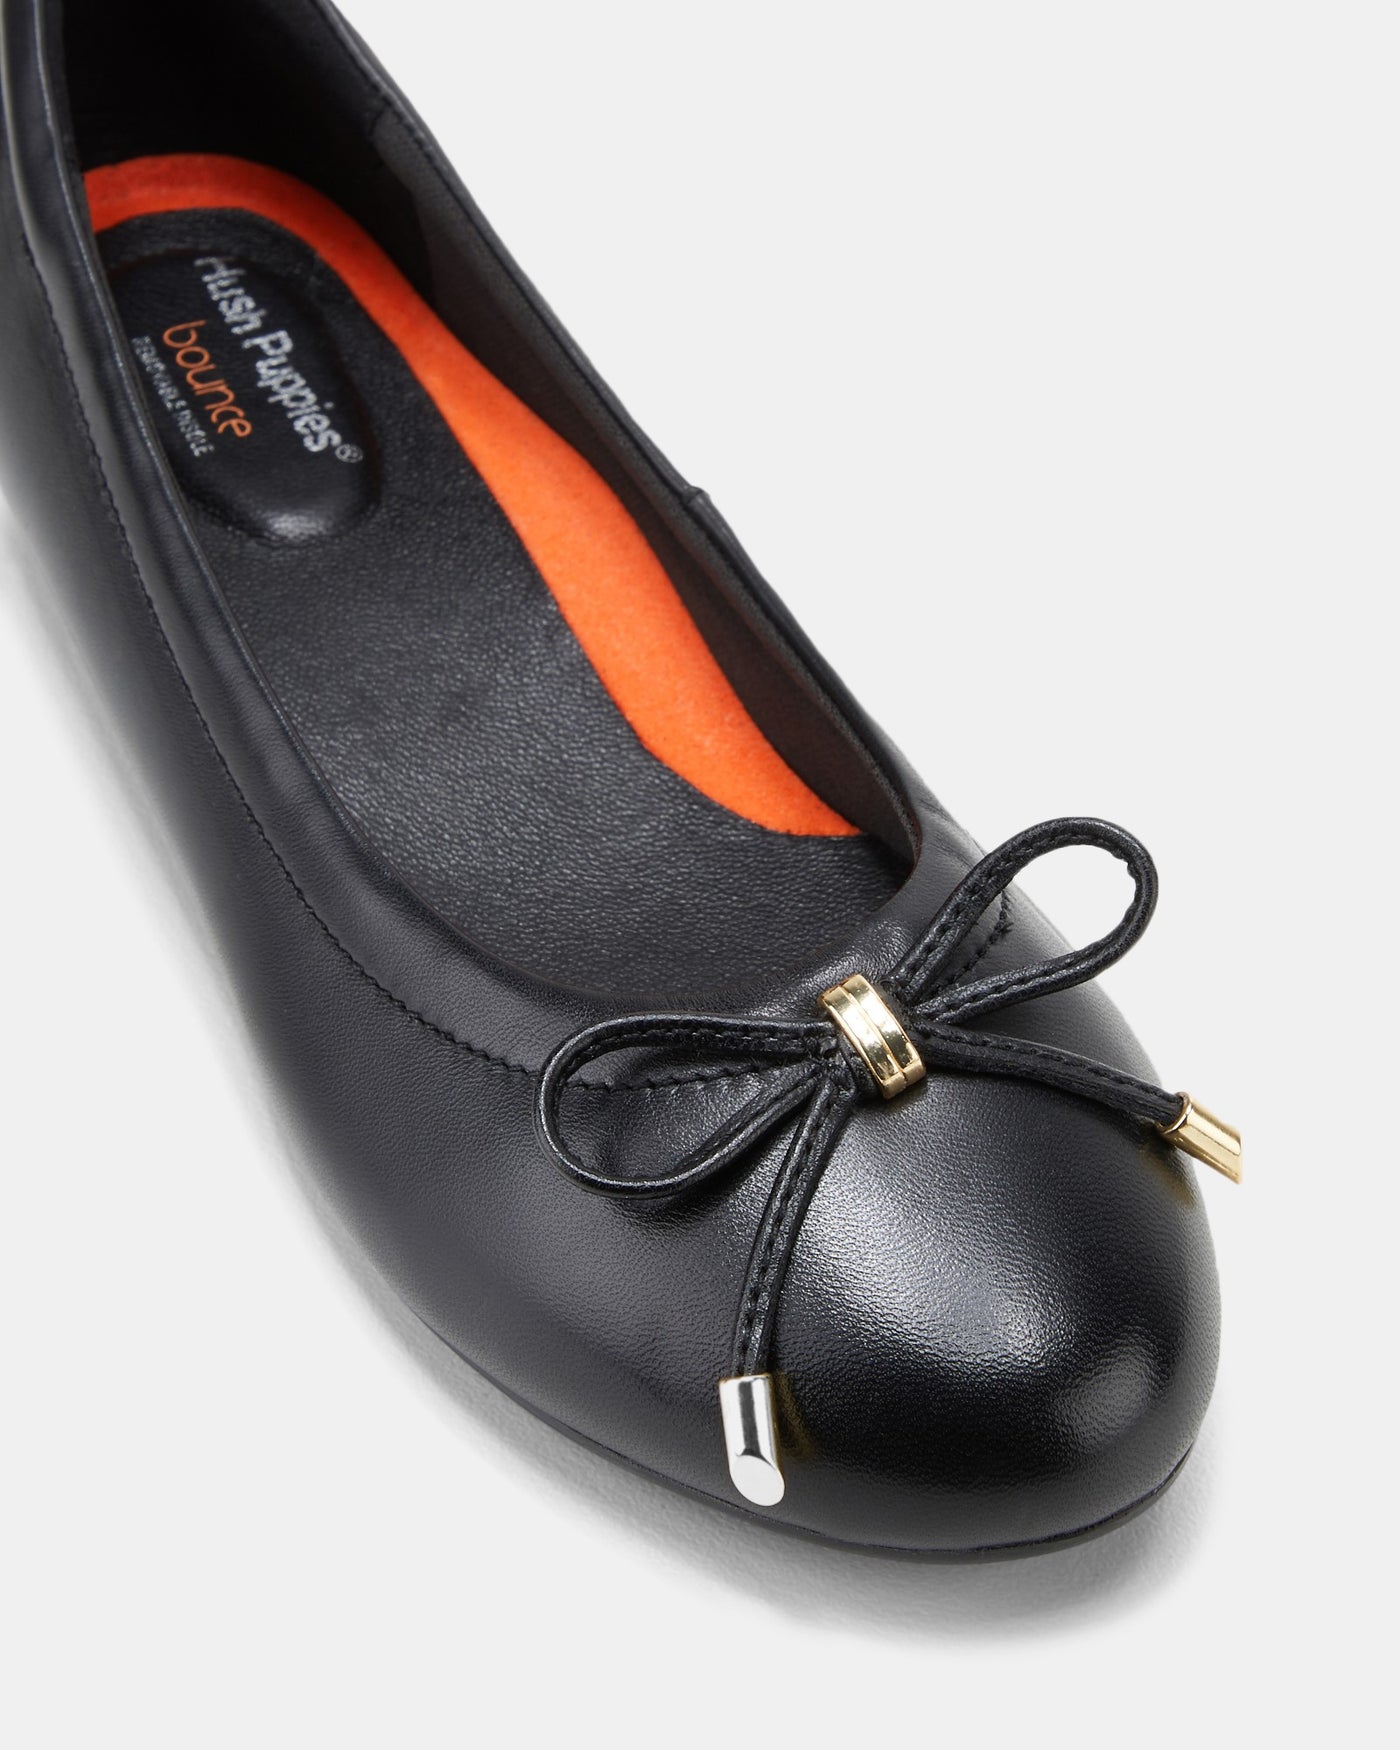 HUSH PUPPIES THE BALLET BLACK - Women Belle Flats - Collective Shoes 